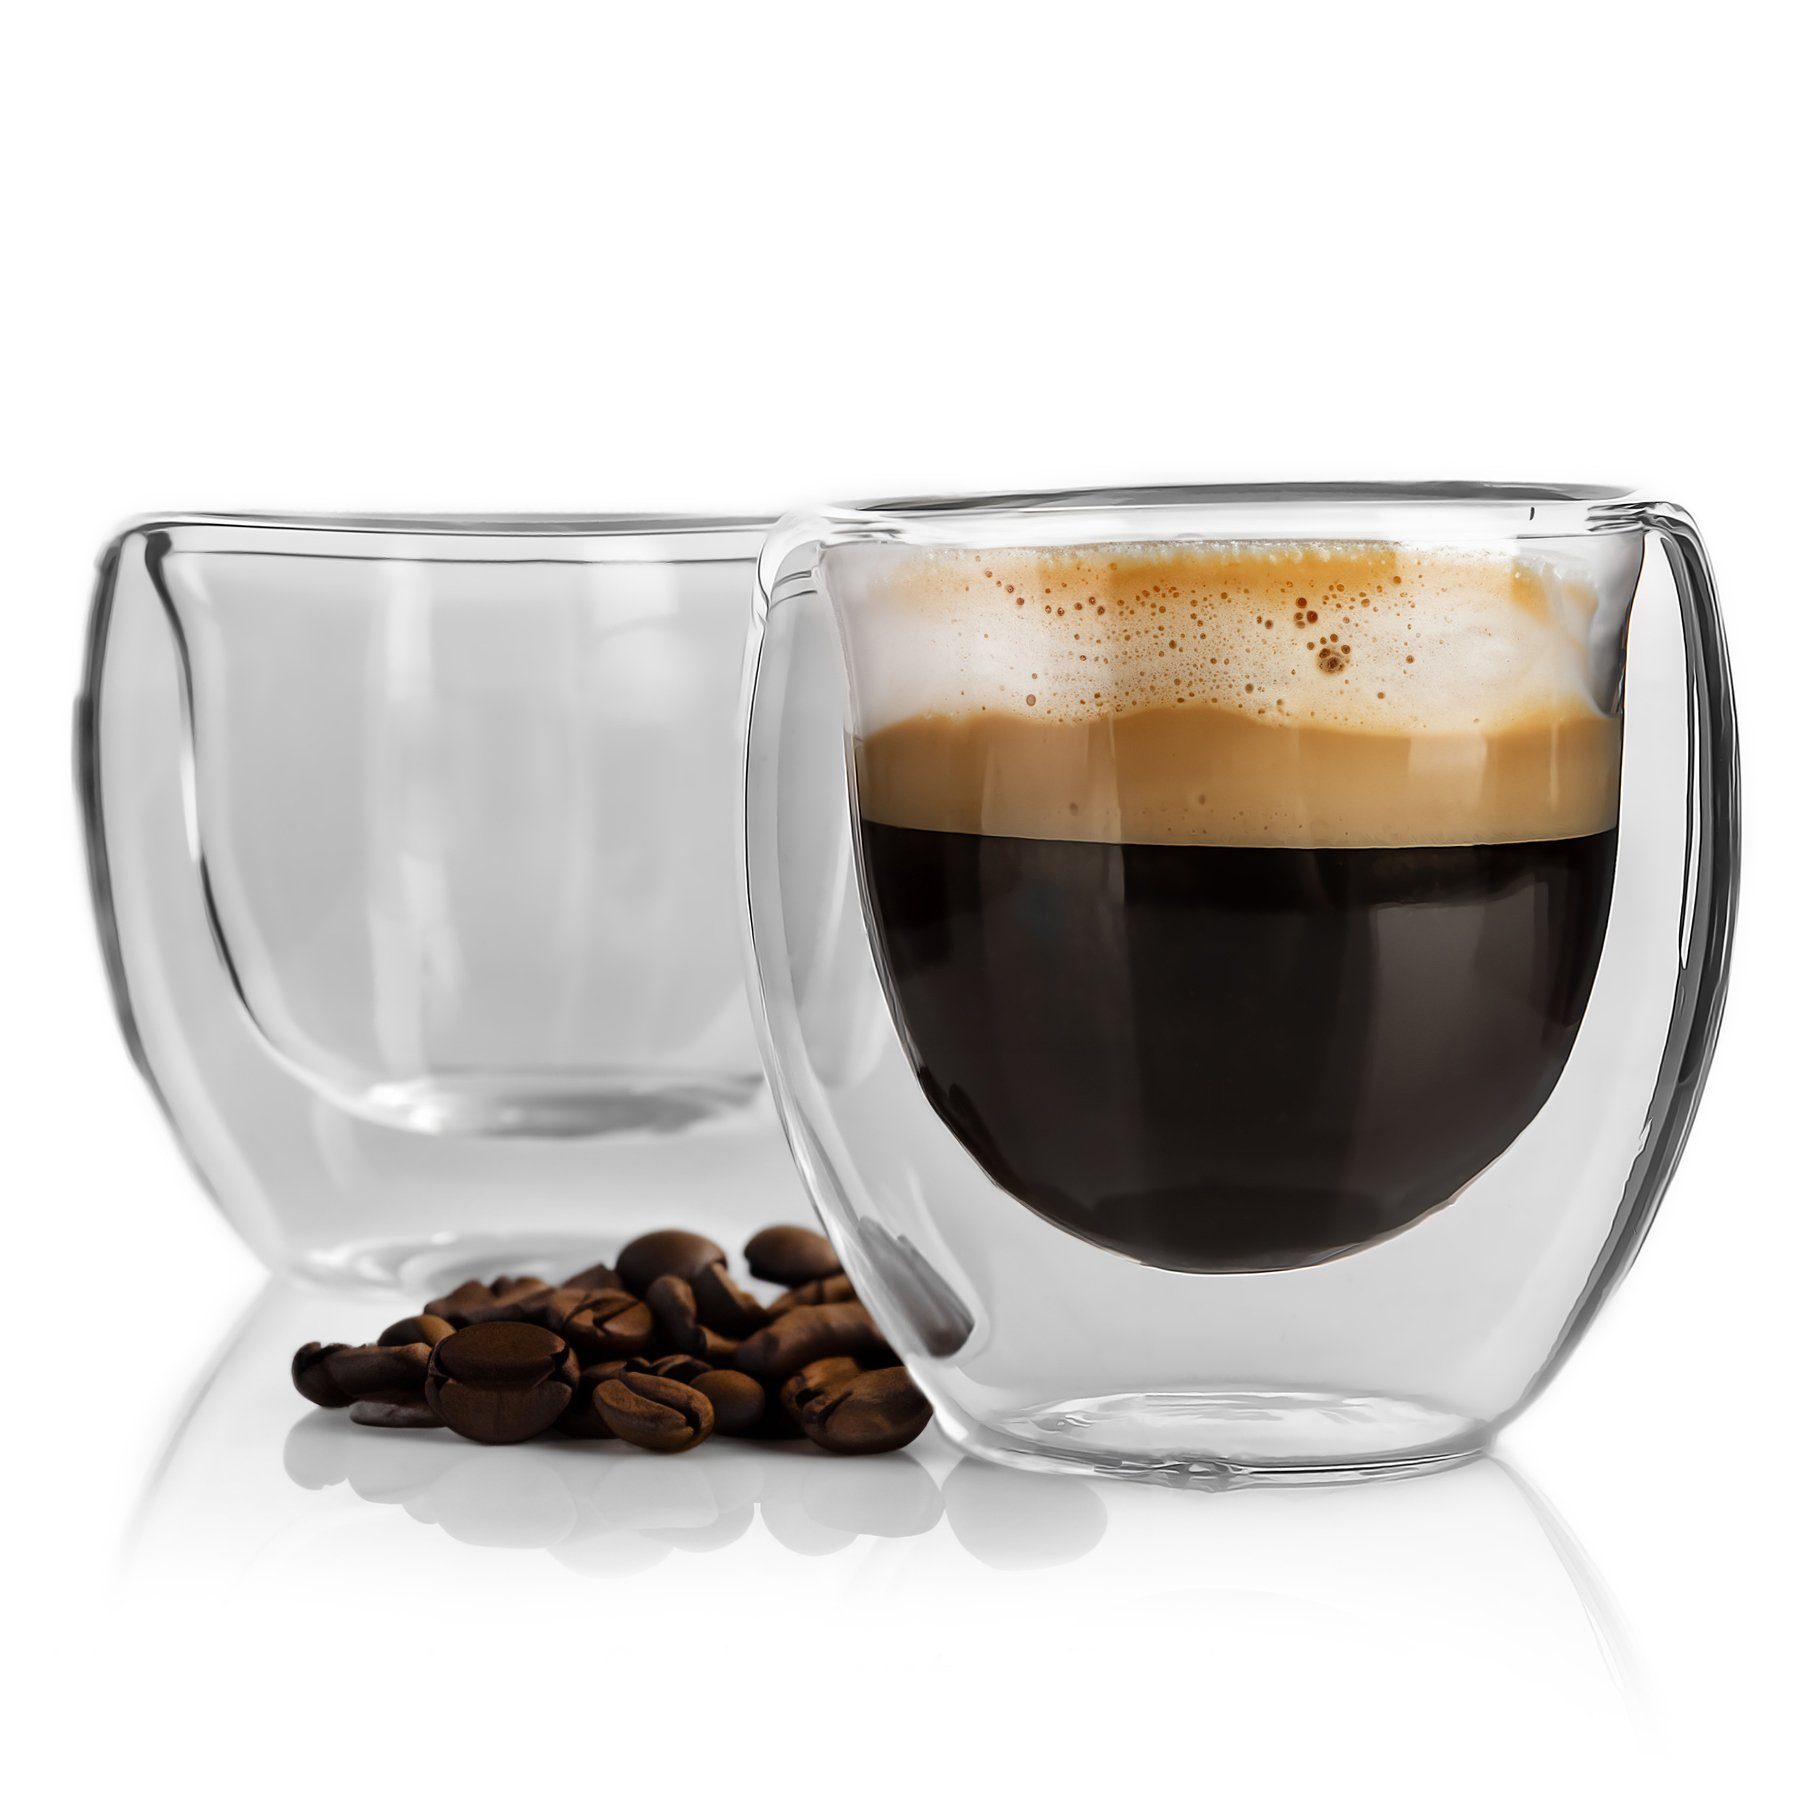 https://i.otto.de/i/otto/3769abff-3854-54fc-bb33-80b5f79647b6/bigdean-espressoglas-2-stueck-doppelwandiges-espresso-glas-80-ml-spuelmaschinenfest-glas.jpg?$formatz$